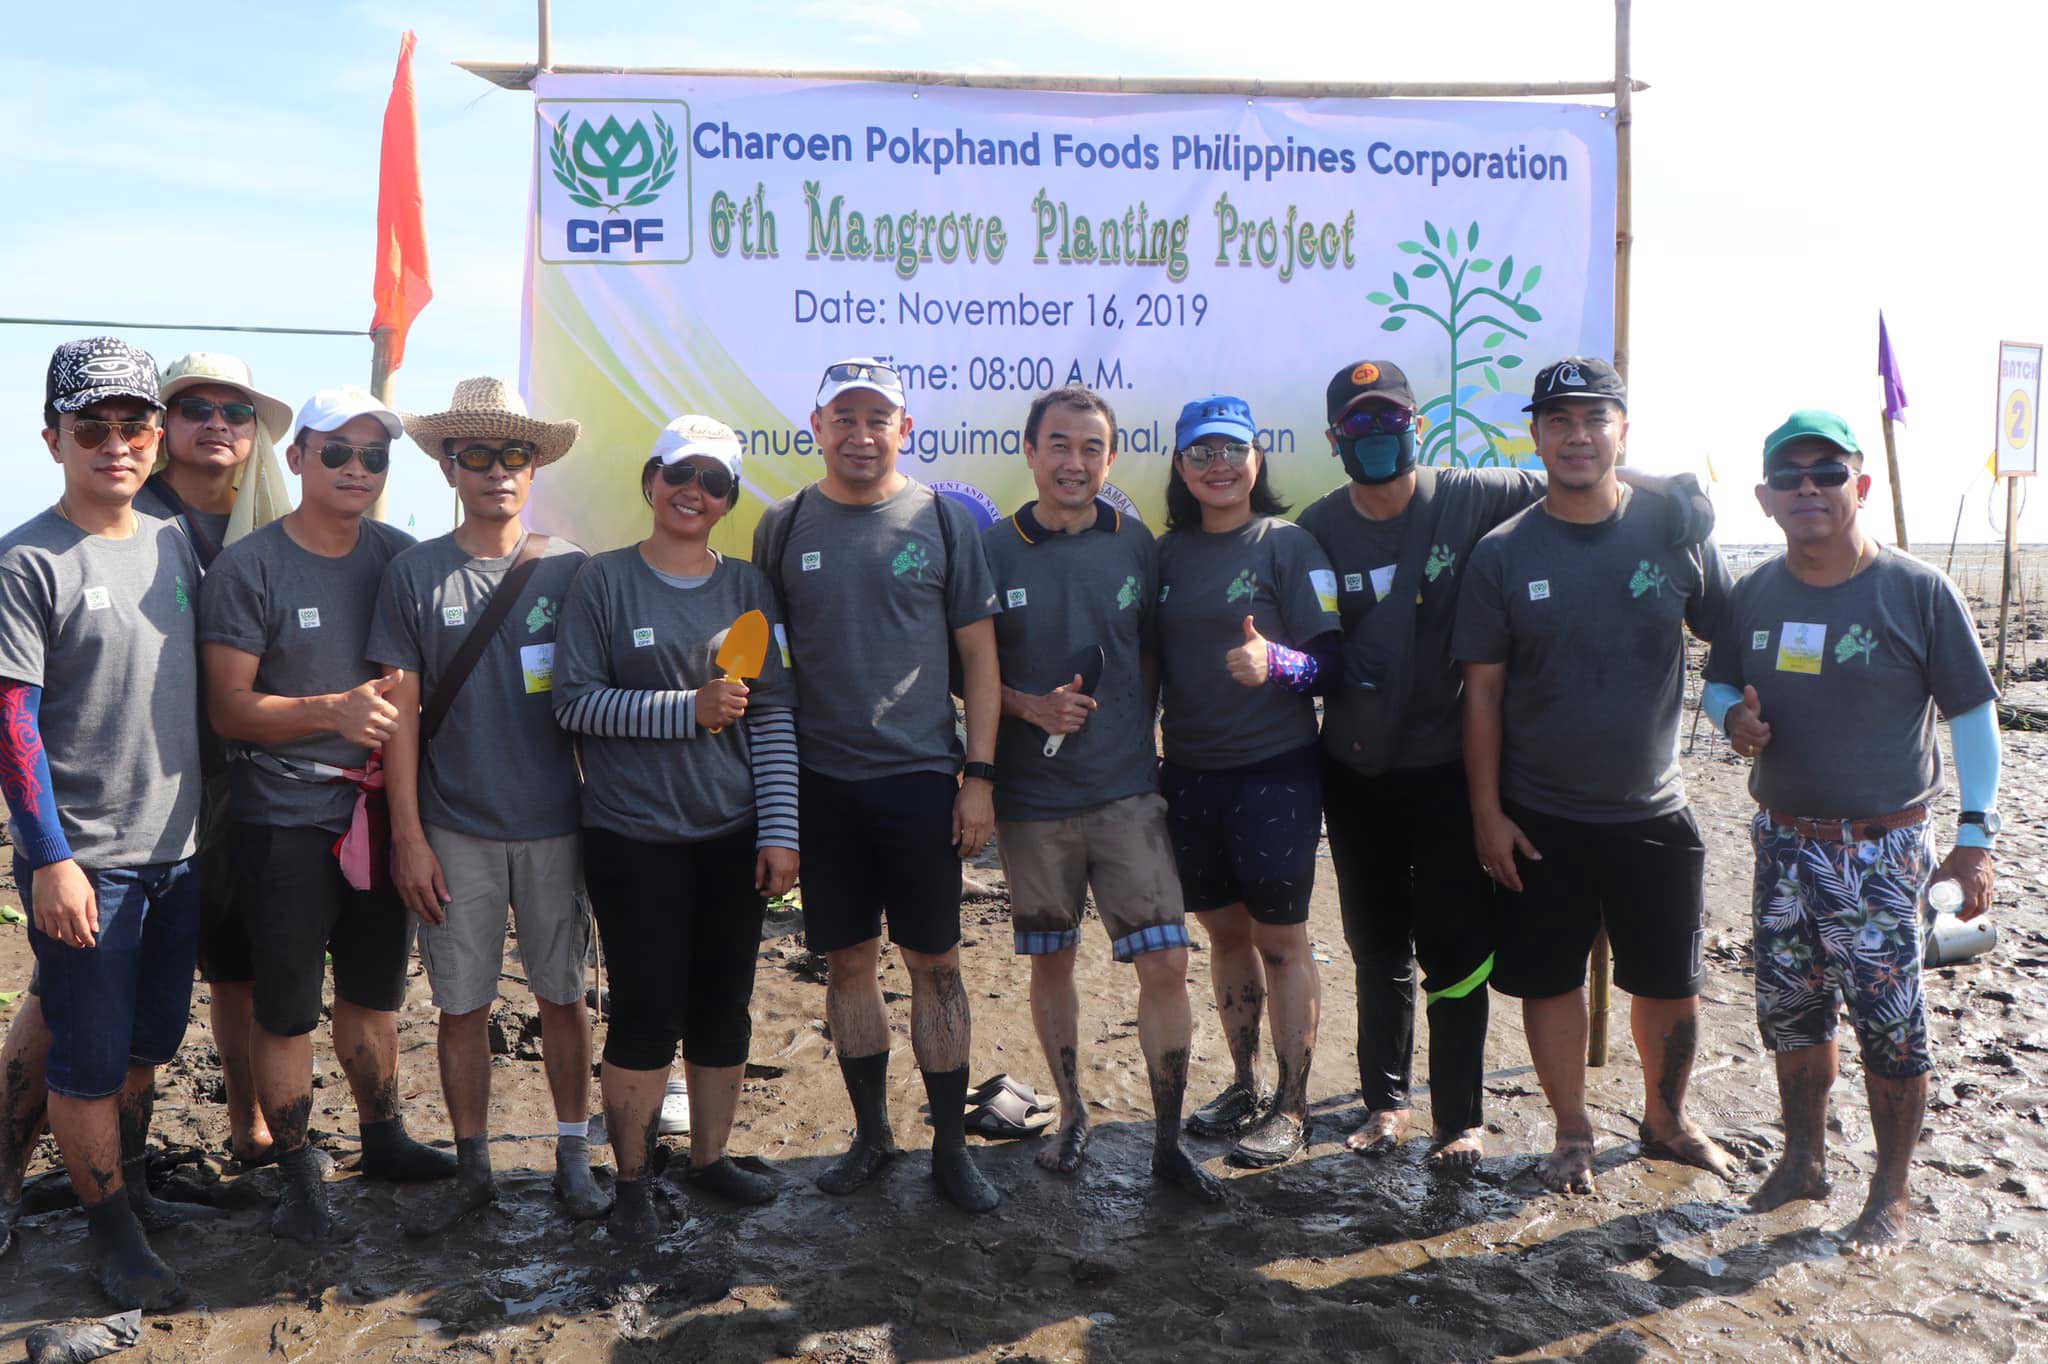 CPF ฟิลิปปินส์ ธุรกิจสัตว์น้ำ จับมือชุมชน ร่วมปลูกป่าชายเลน ปีที่ 6